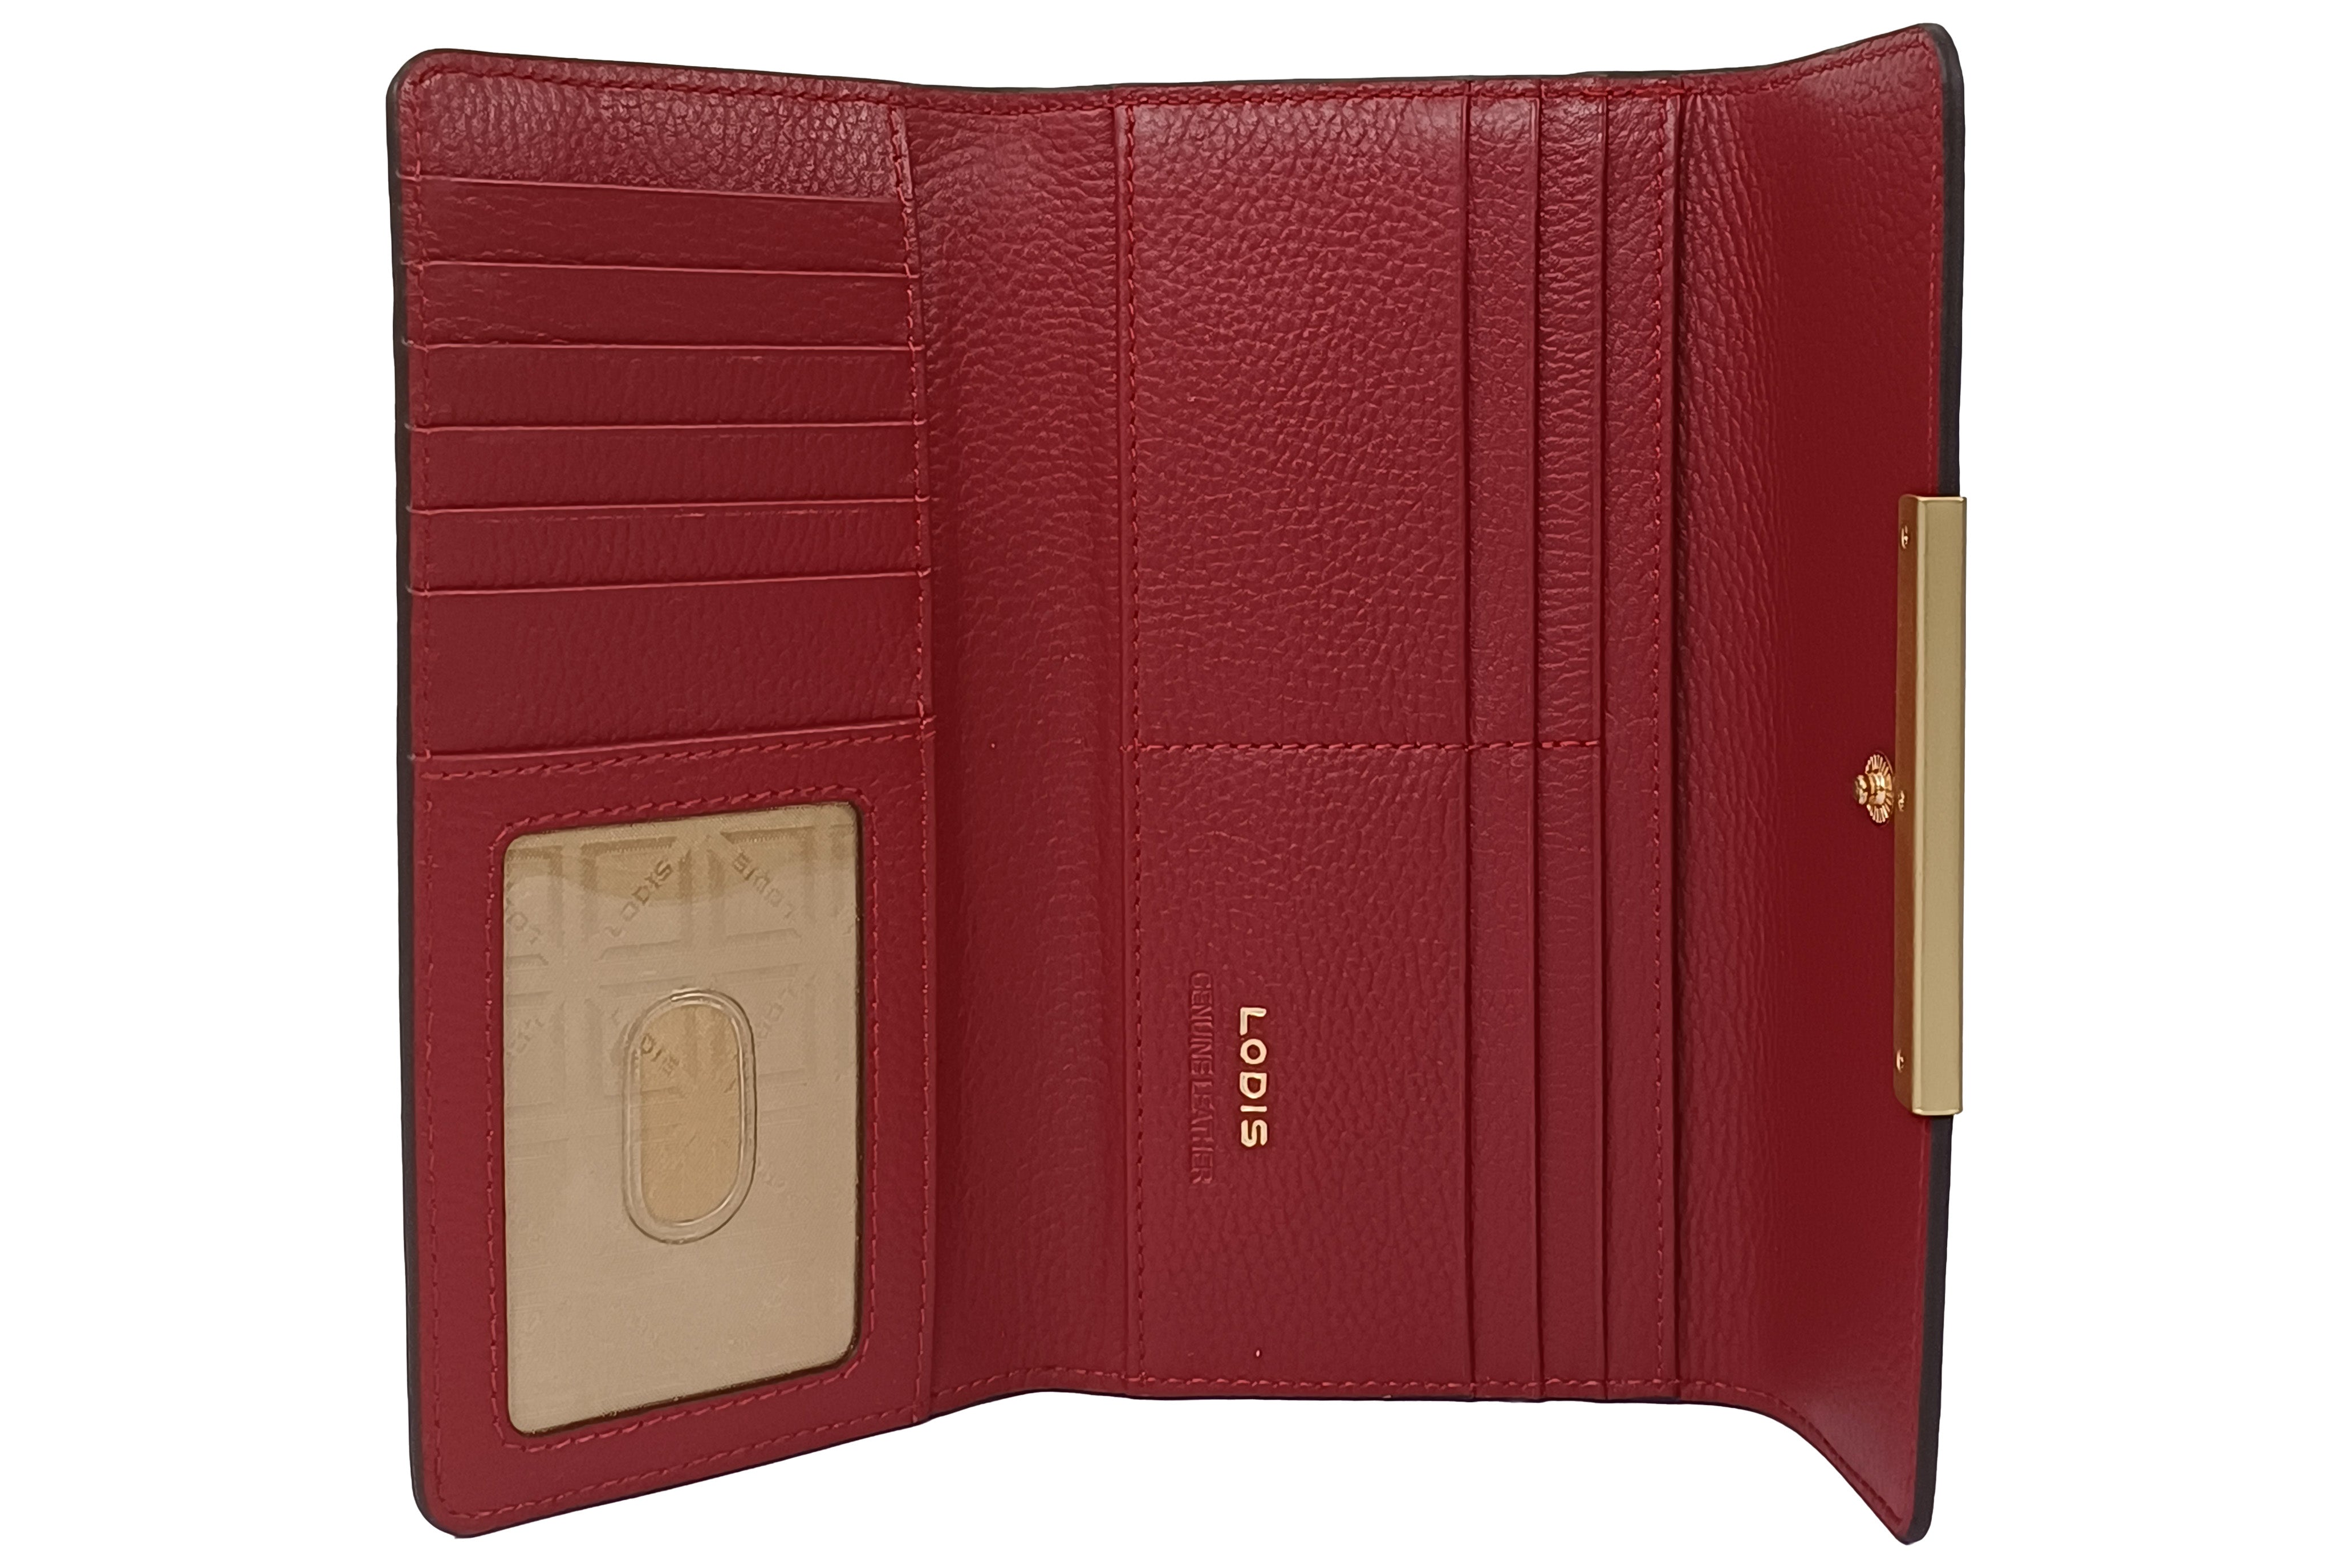  Shop now & Flaunt Style with Dreya Large Flap Wallet | Lodis